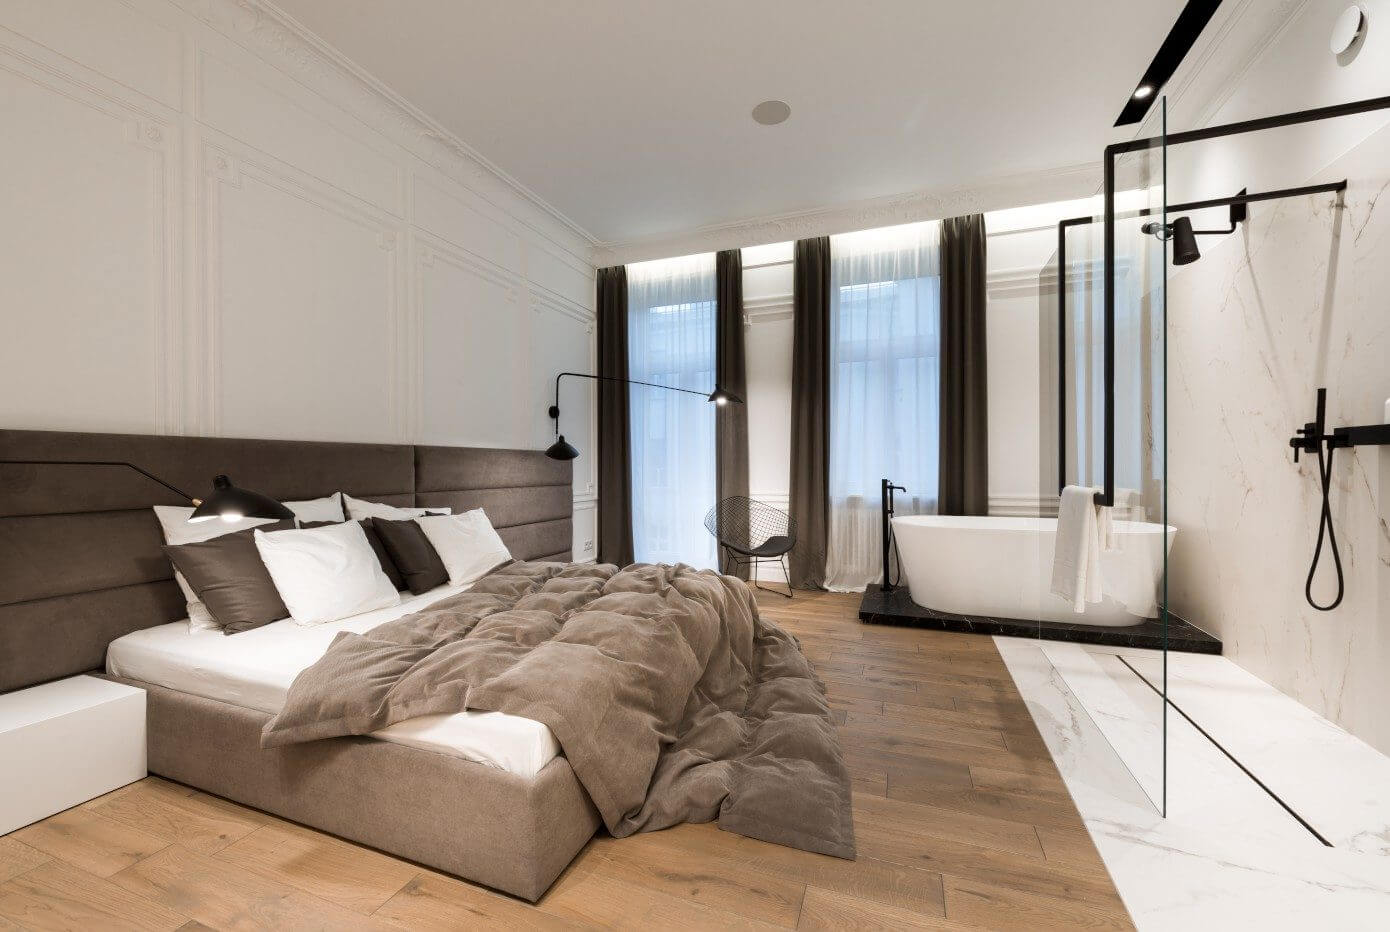 Apartment in Warsaw by Nasciturus Design